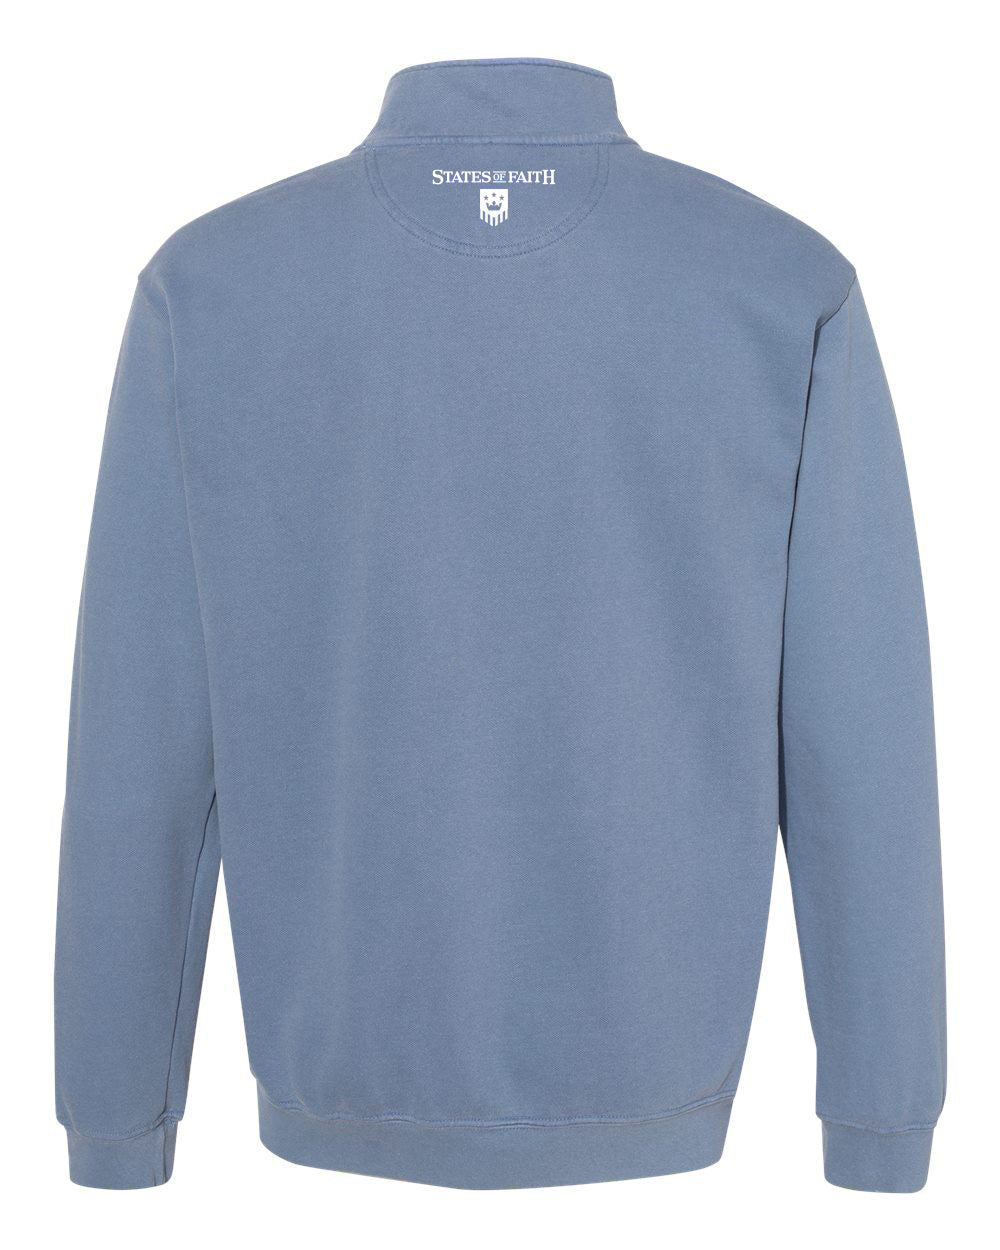 Ohio State Catholic Rosary custom sweatshirt, drop hoodie, comfort colors quarter zip, pullover, Gift, State Pride, blue jean-back